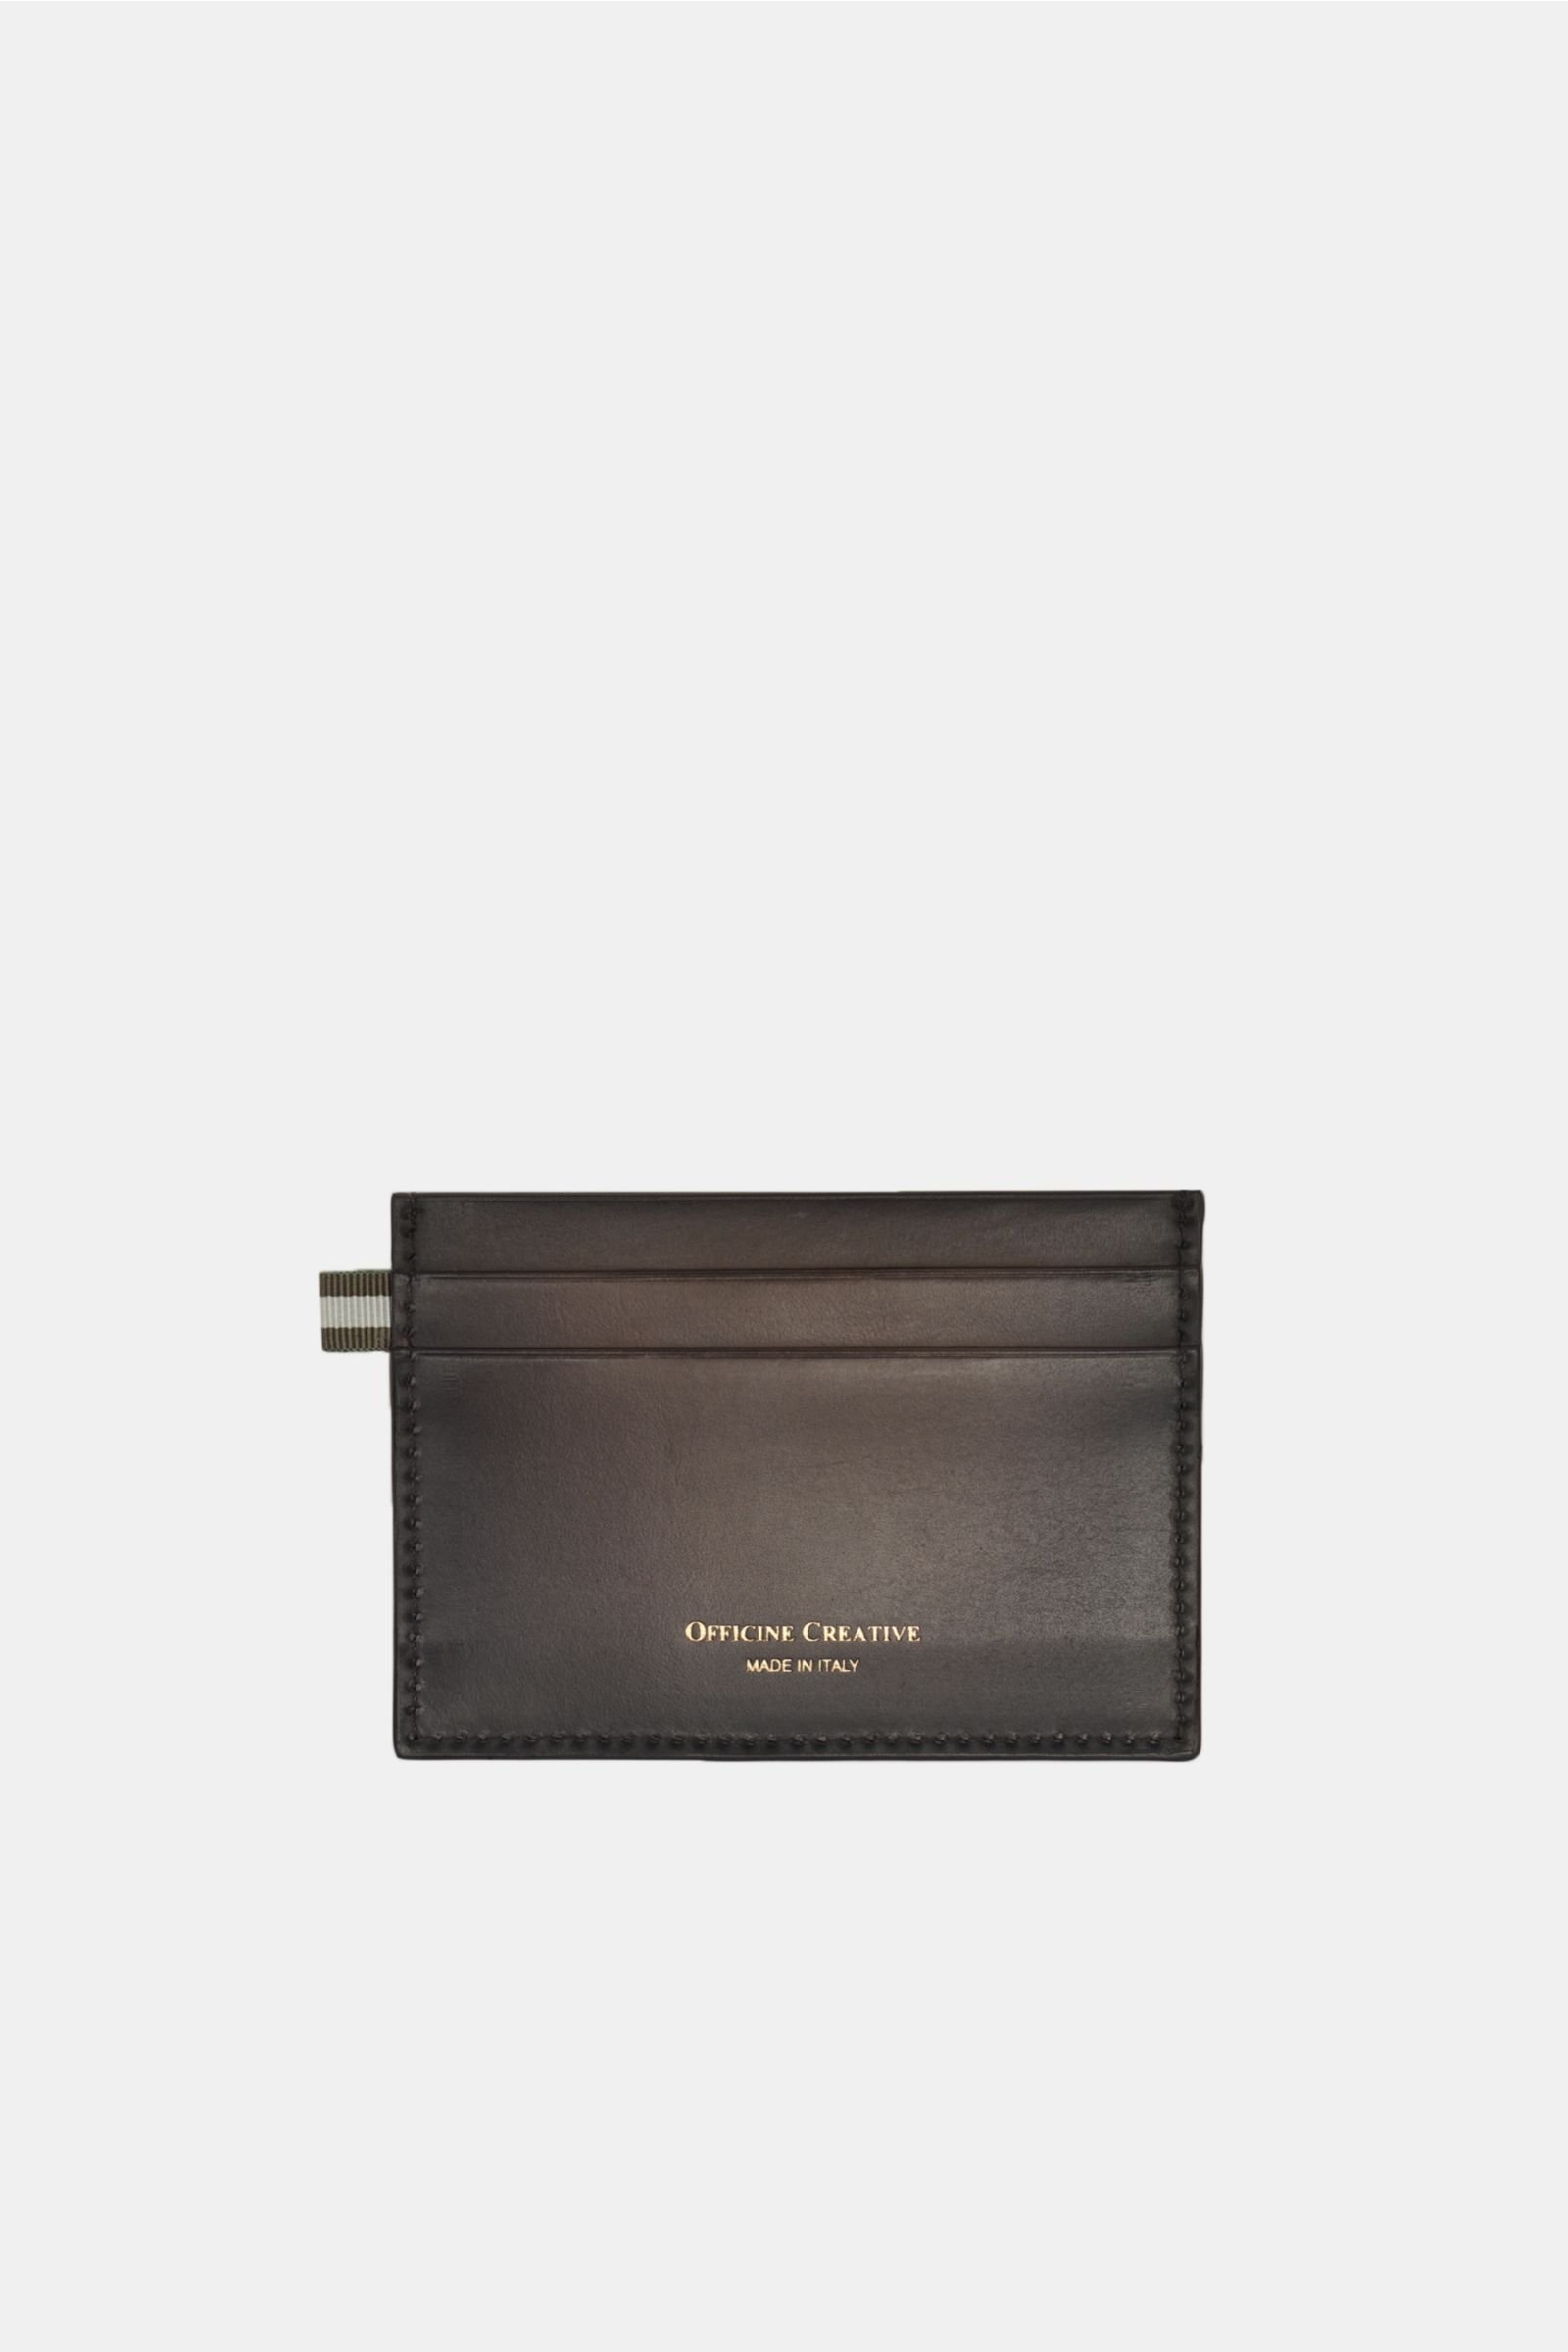 Credit card holder grey-brown